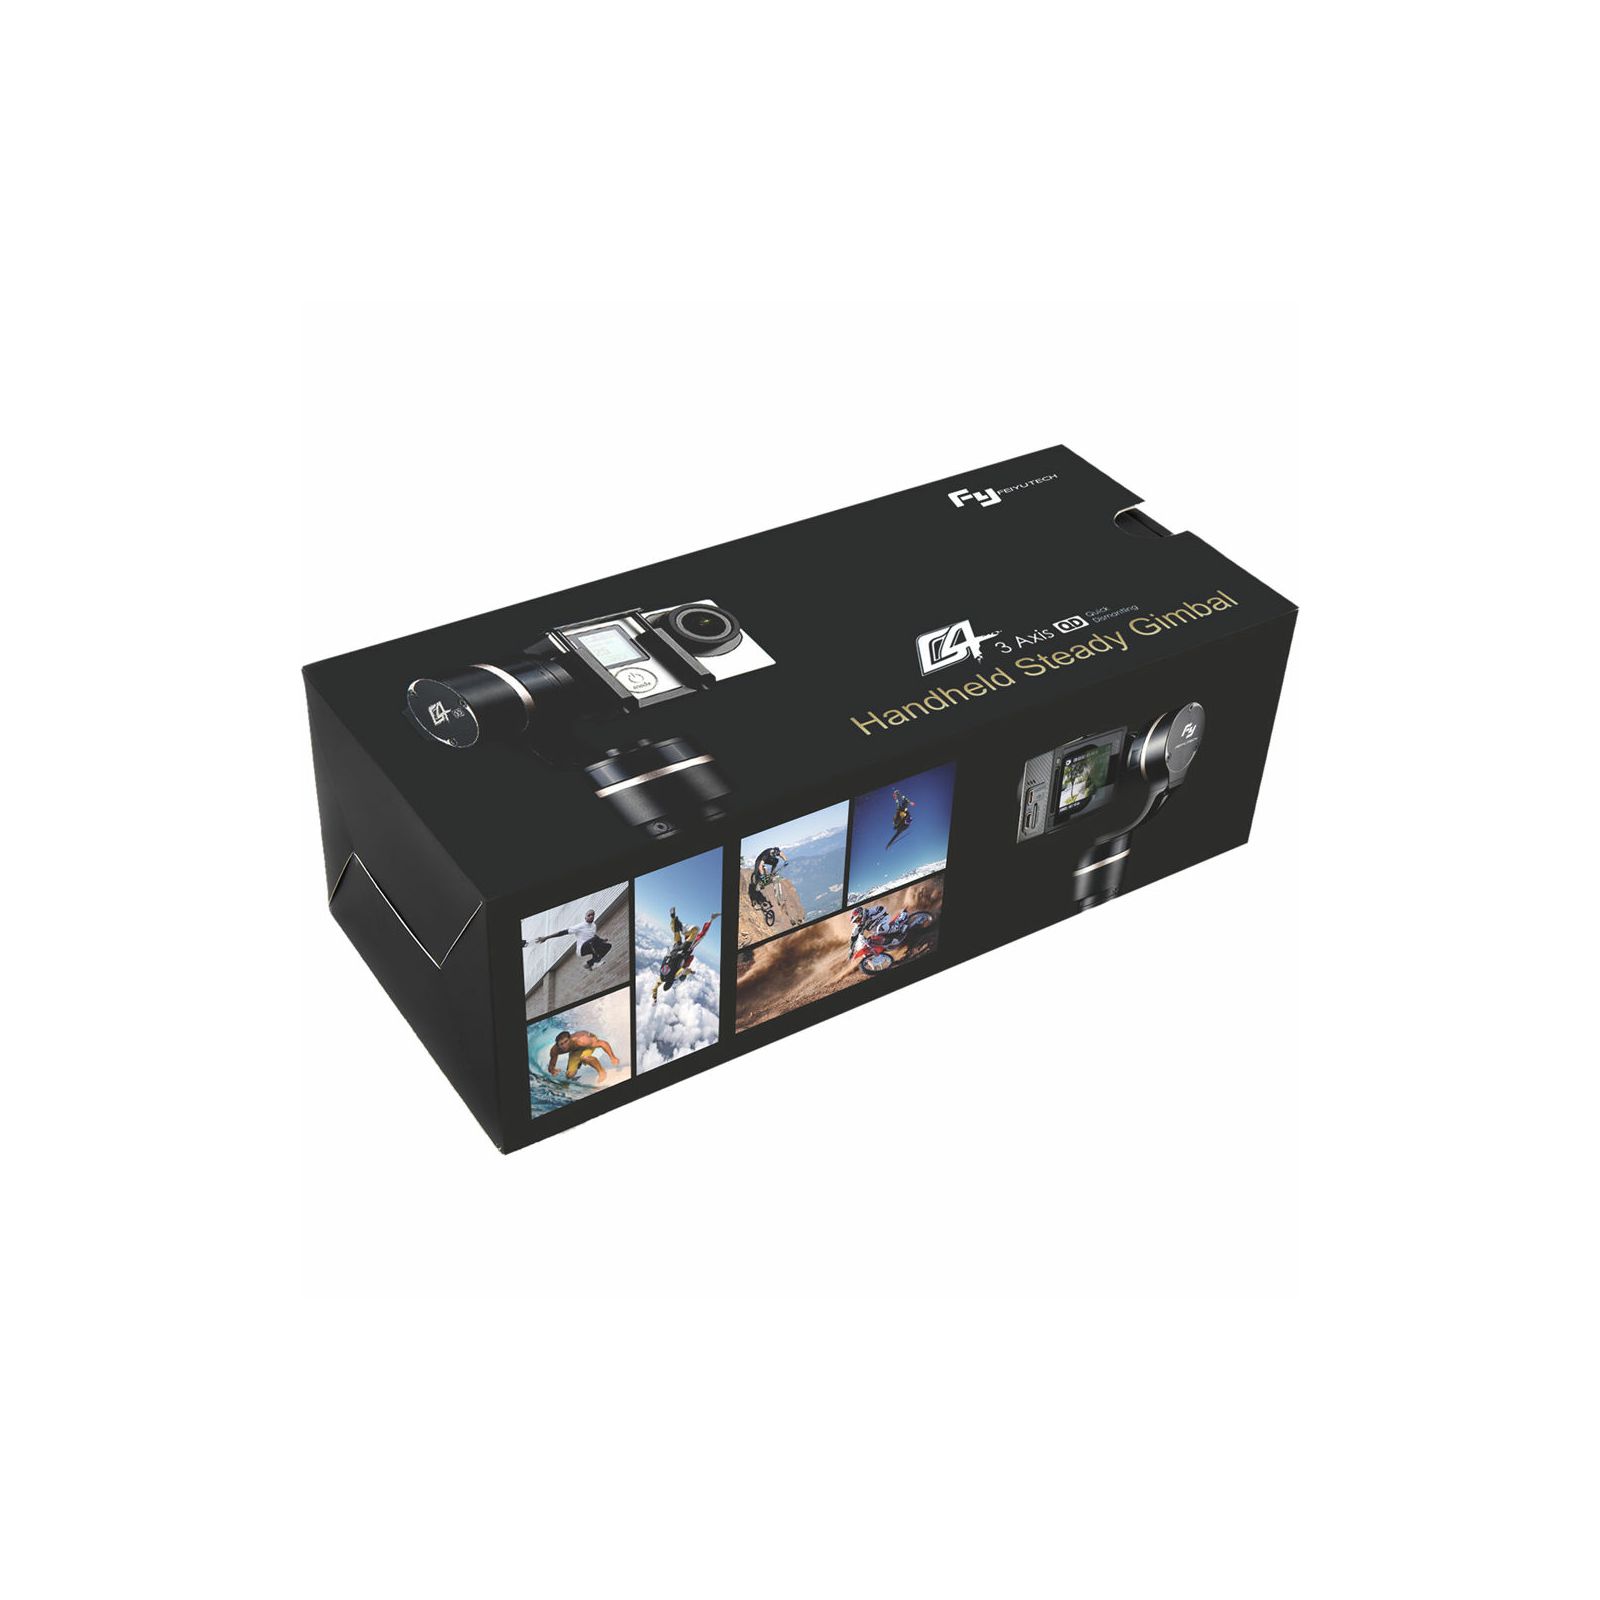 Feiyu Tech G4 QD Classic Reinvented 3-Axis GoPro Handheld gimbal stabilizator za Hero4 kamere